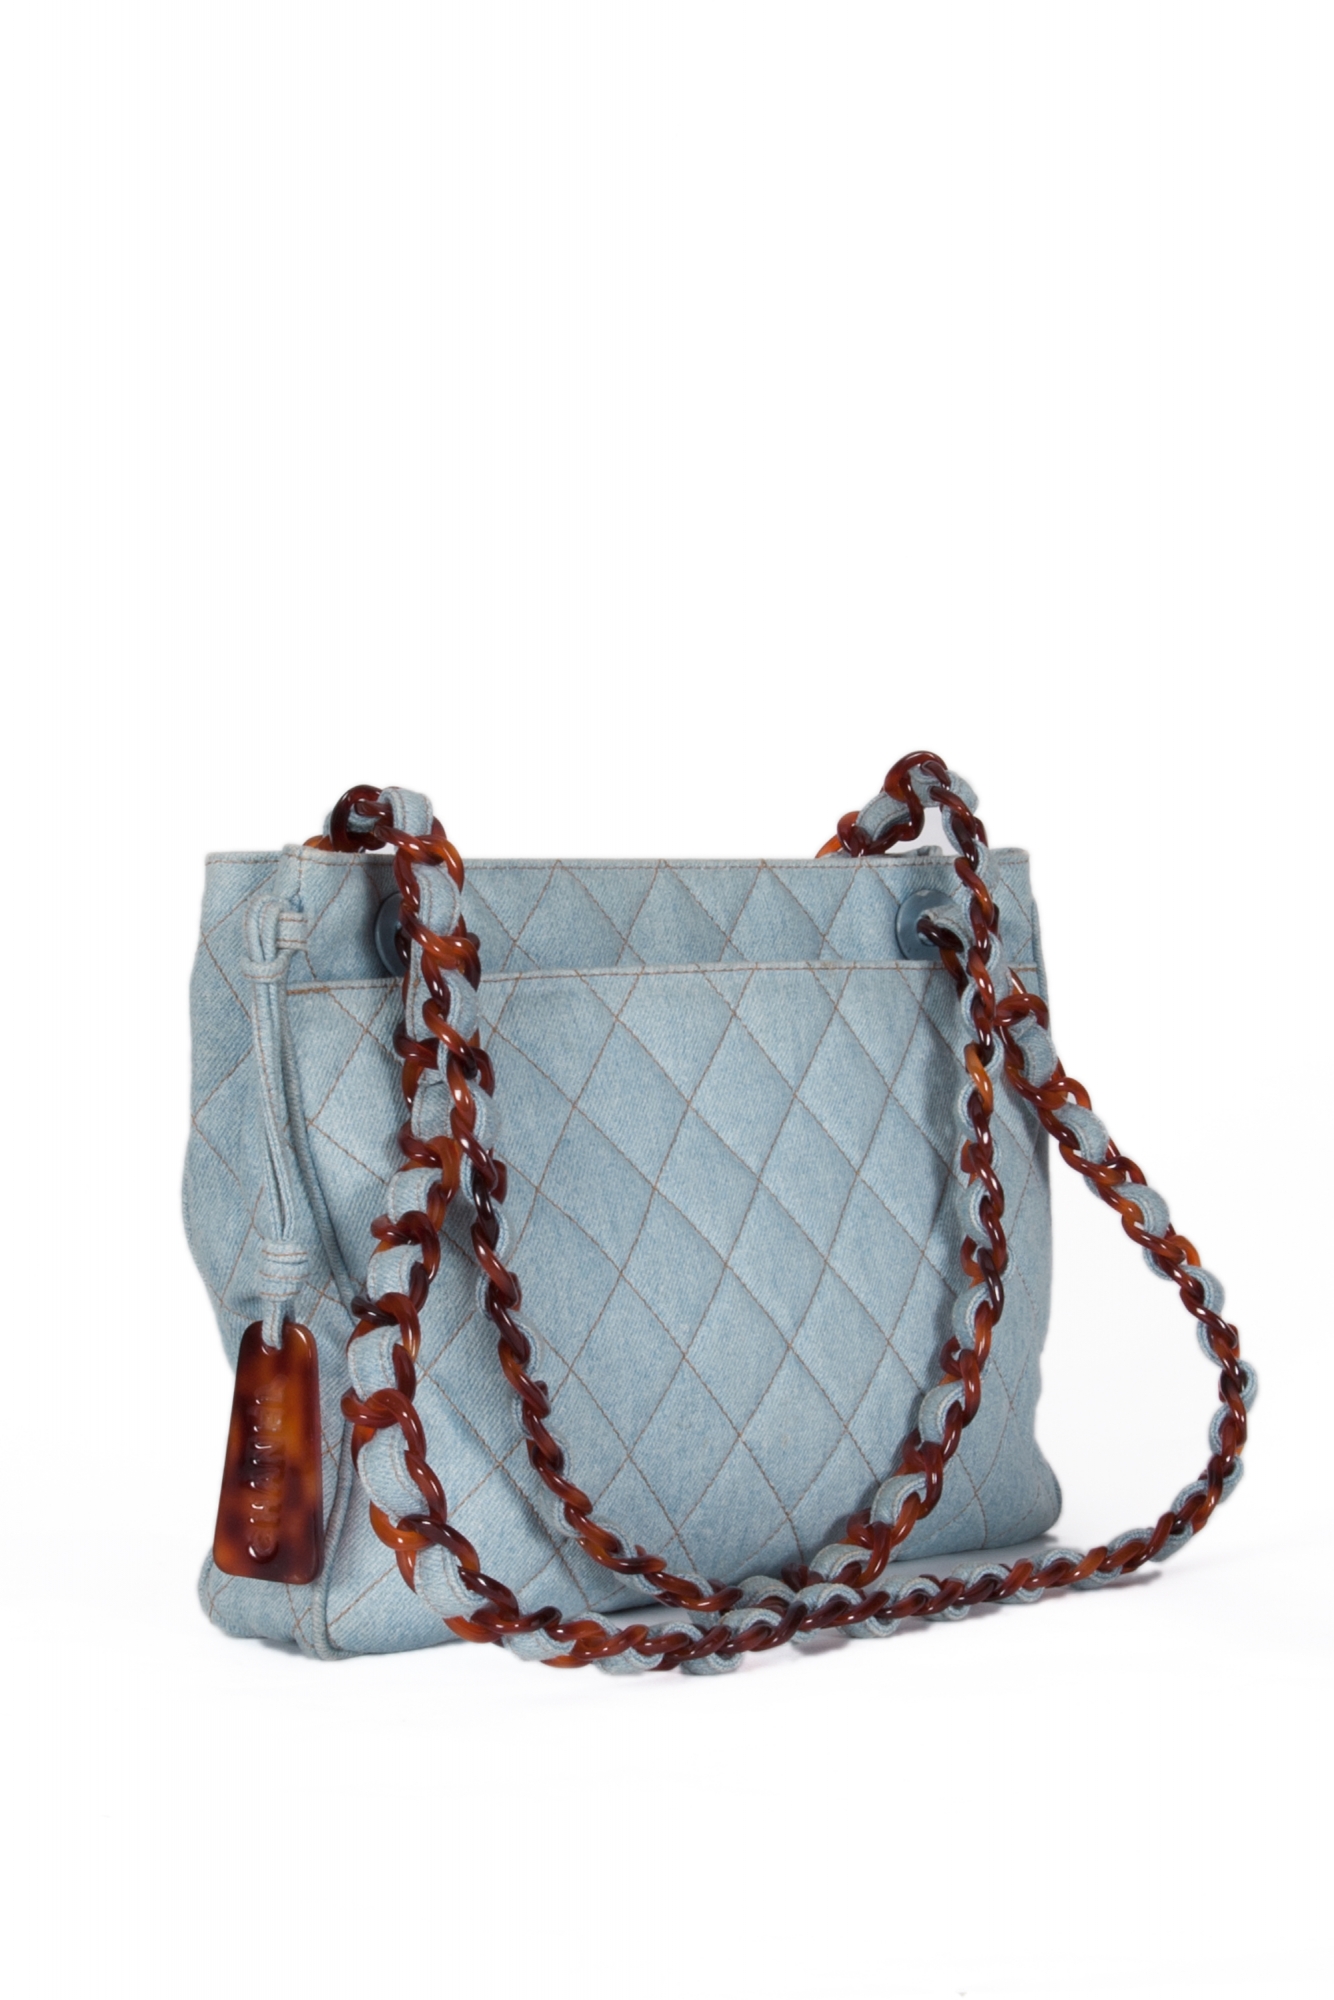 Chanel Blue Denim Quilted Tortoise Chain Shoulder Bag - Chanel